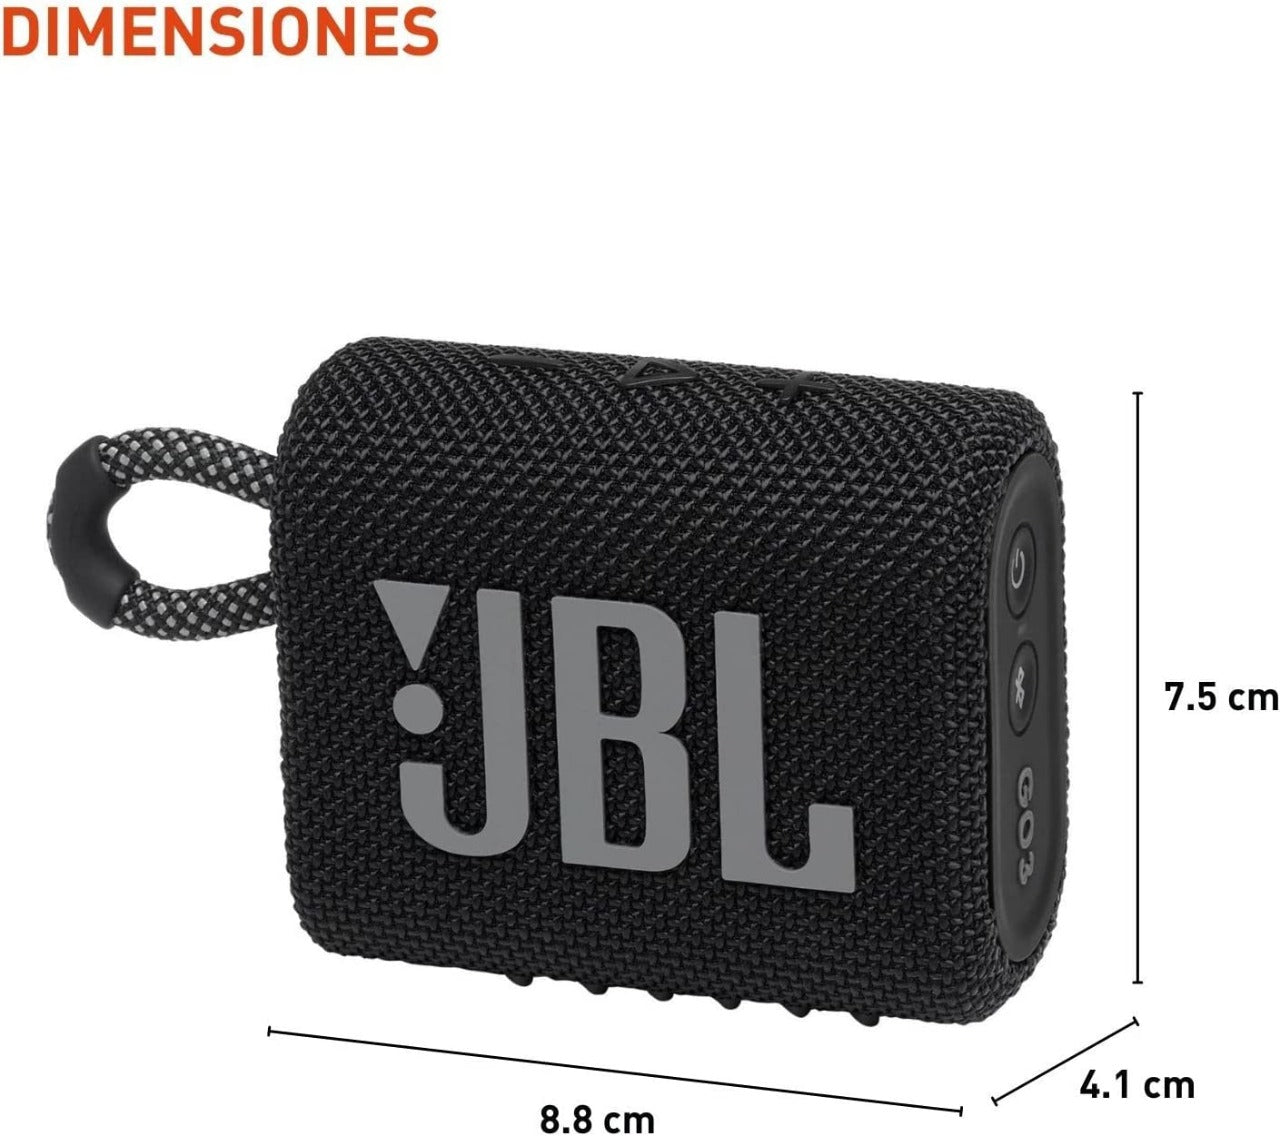 -lebanon-beirut-warranty-shop-sale-shopping-best prices-Speaker-jbl-speakers prices in lebanon-jbl prices in lebanon-bluetooth-wireless-portable-